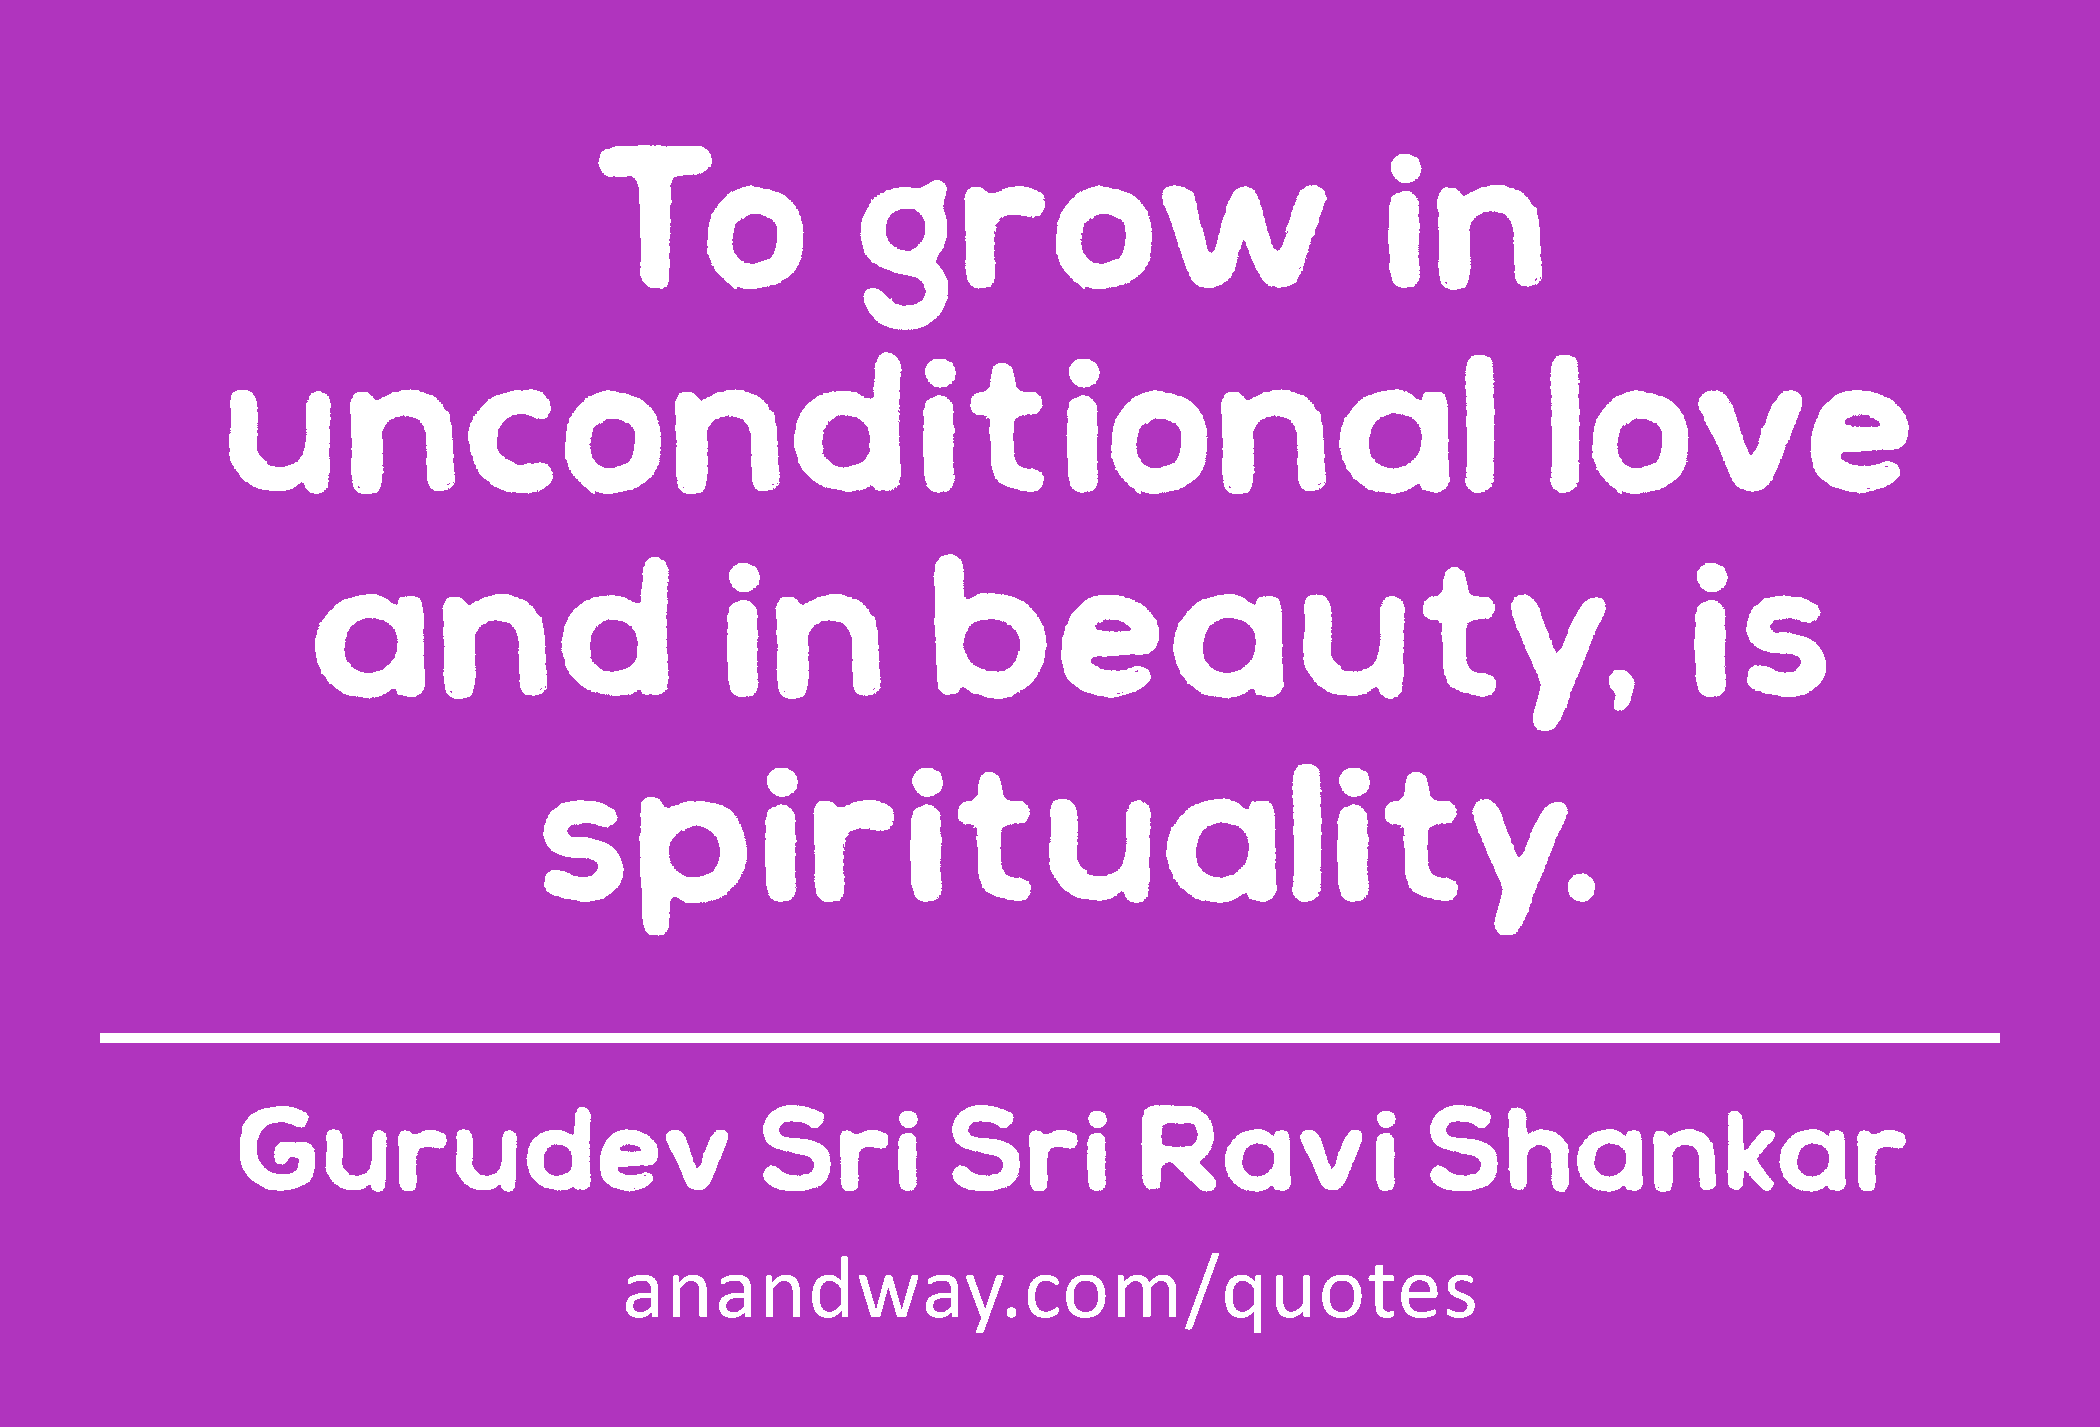 To grow in unconditional love and in beauty, is spirituality. 
 -Gurudev Sri Sri Ravi Shankar